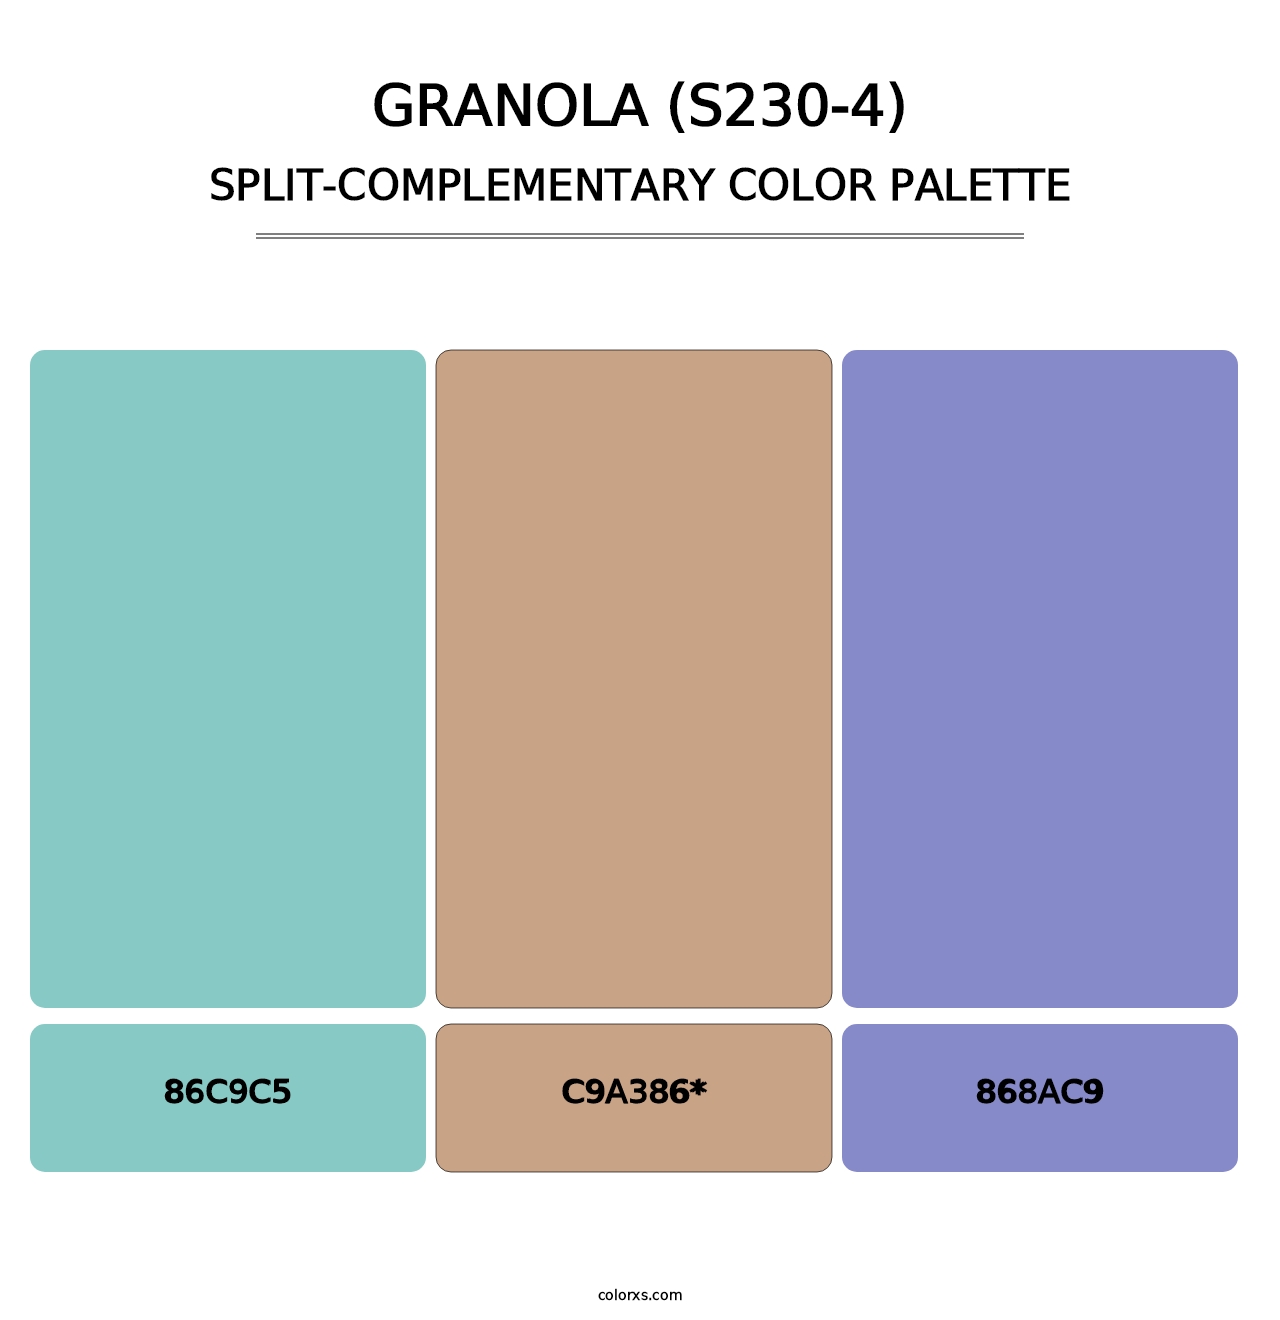 Granola (S230-4) - Split-Complementary Color Palette